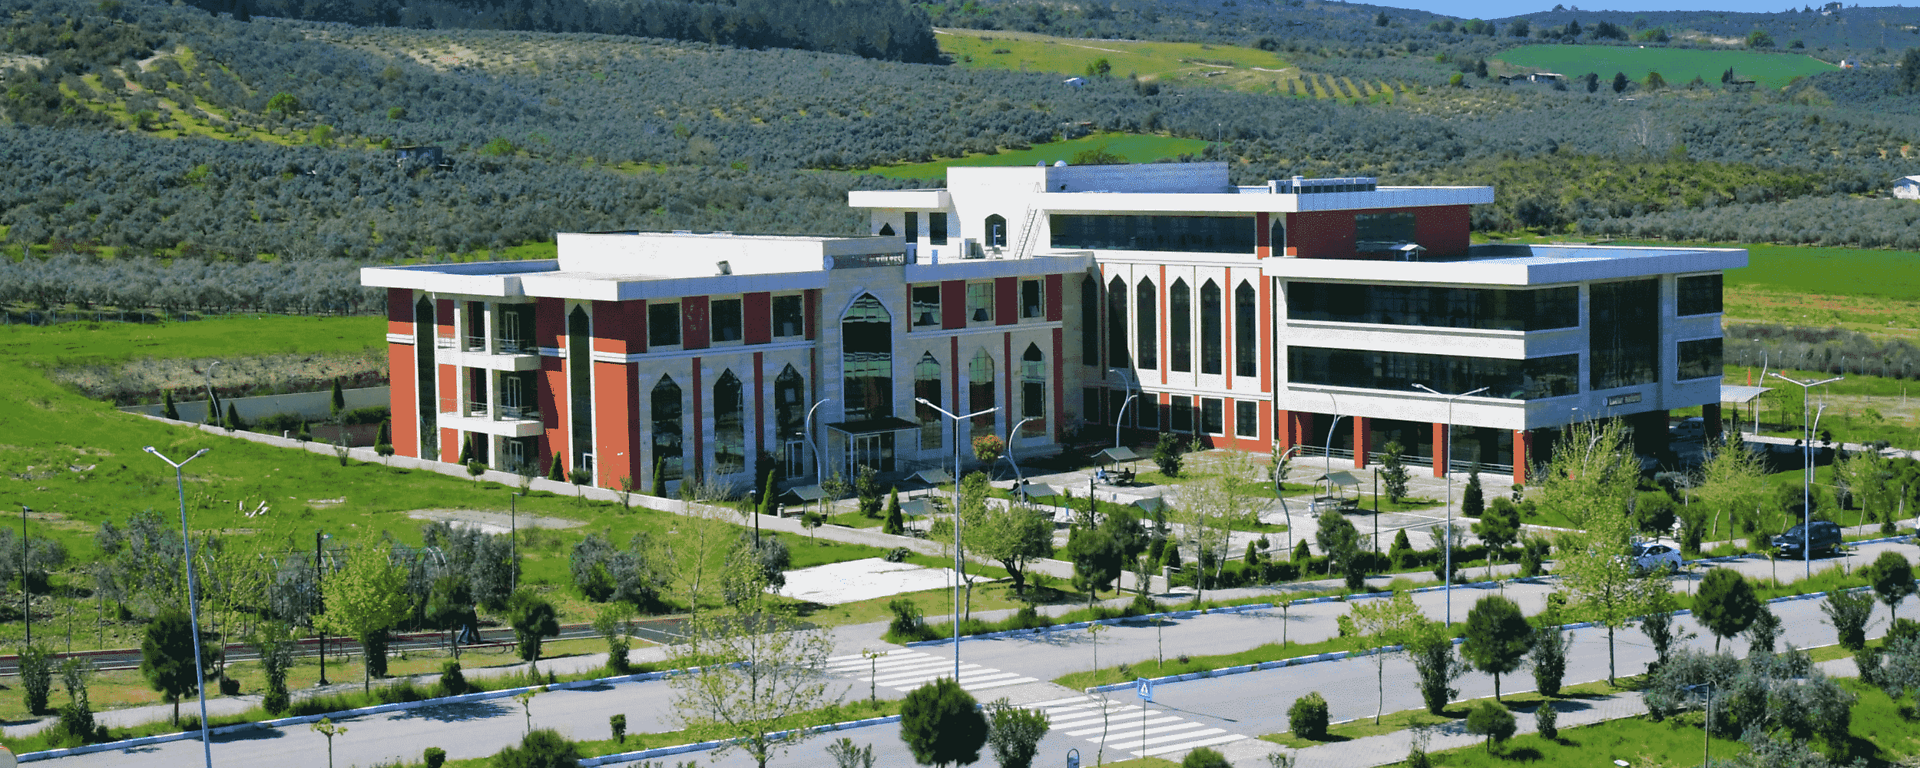 osmaniy universitesi find and study 8 - Osmaniye Korkut Ata University